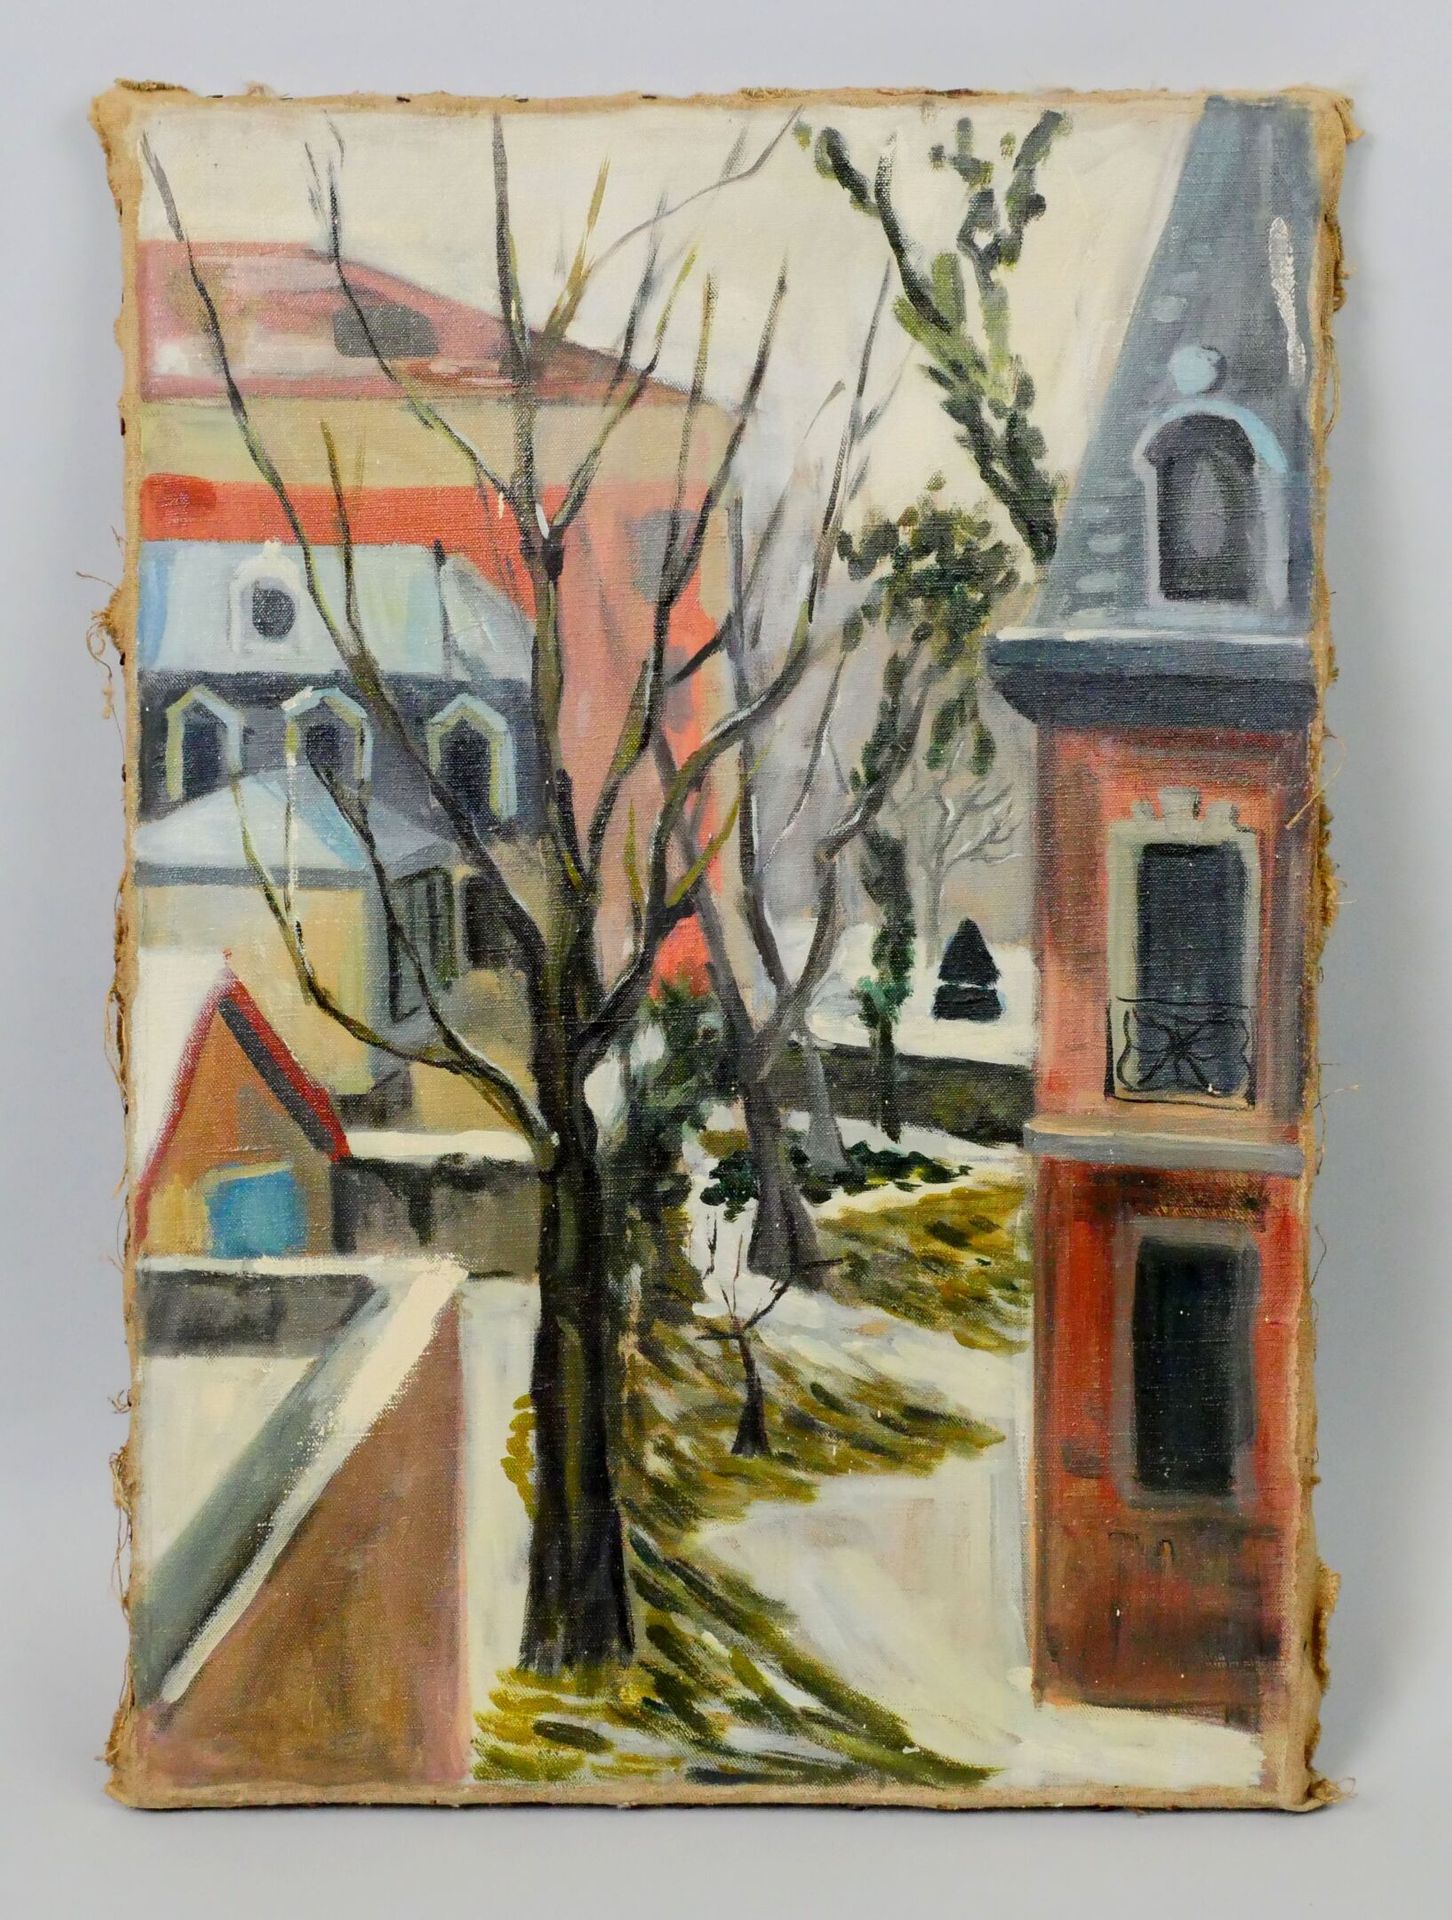 Null 妮可-马利特(1931-2021)
巴黎的风景 
无签名的布面油画。承担着对画作位置的详细历史记录。 
尺寸：55 x 40 cm 

抽签将于202&hellip;